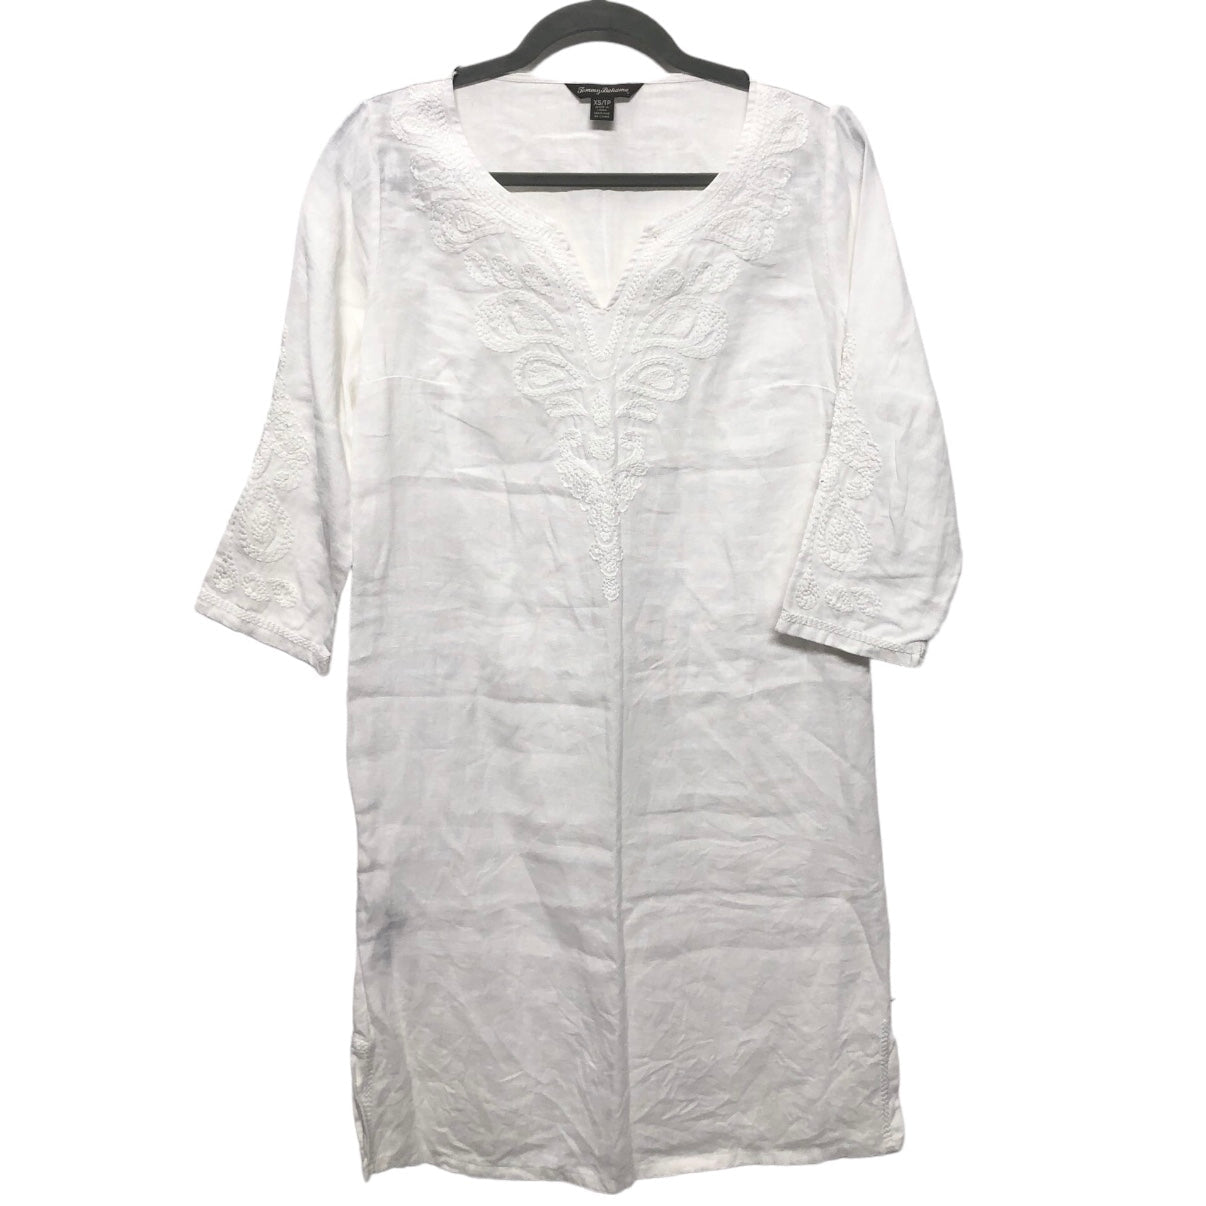 White Dress Casual Short Tommy Bahama, Size Xs